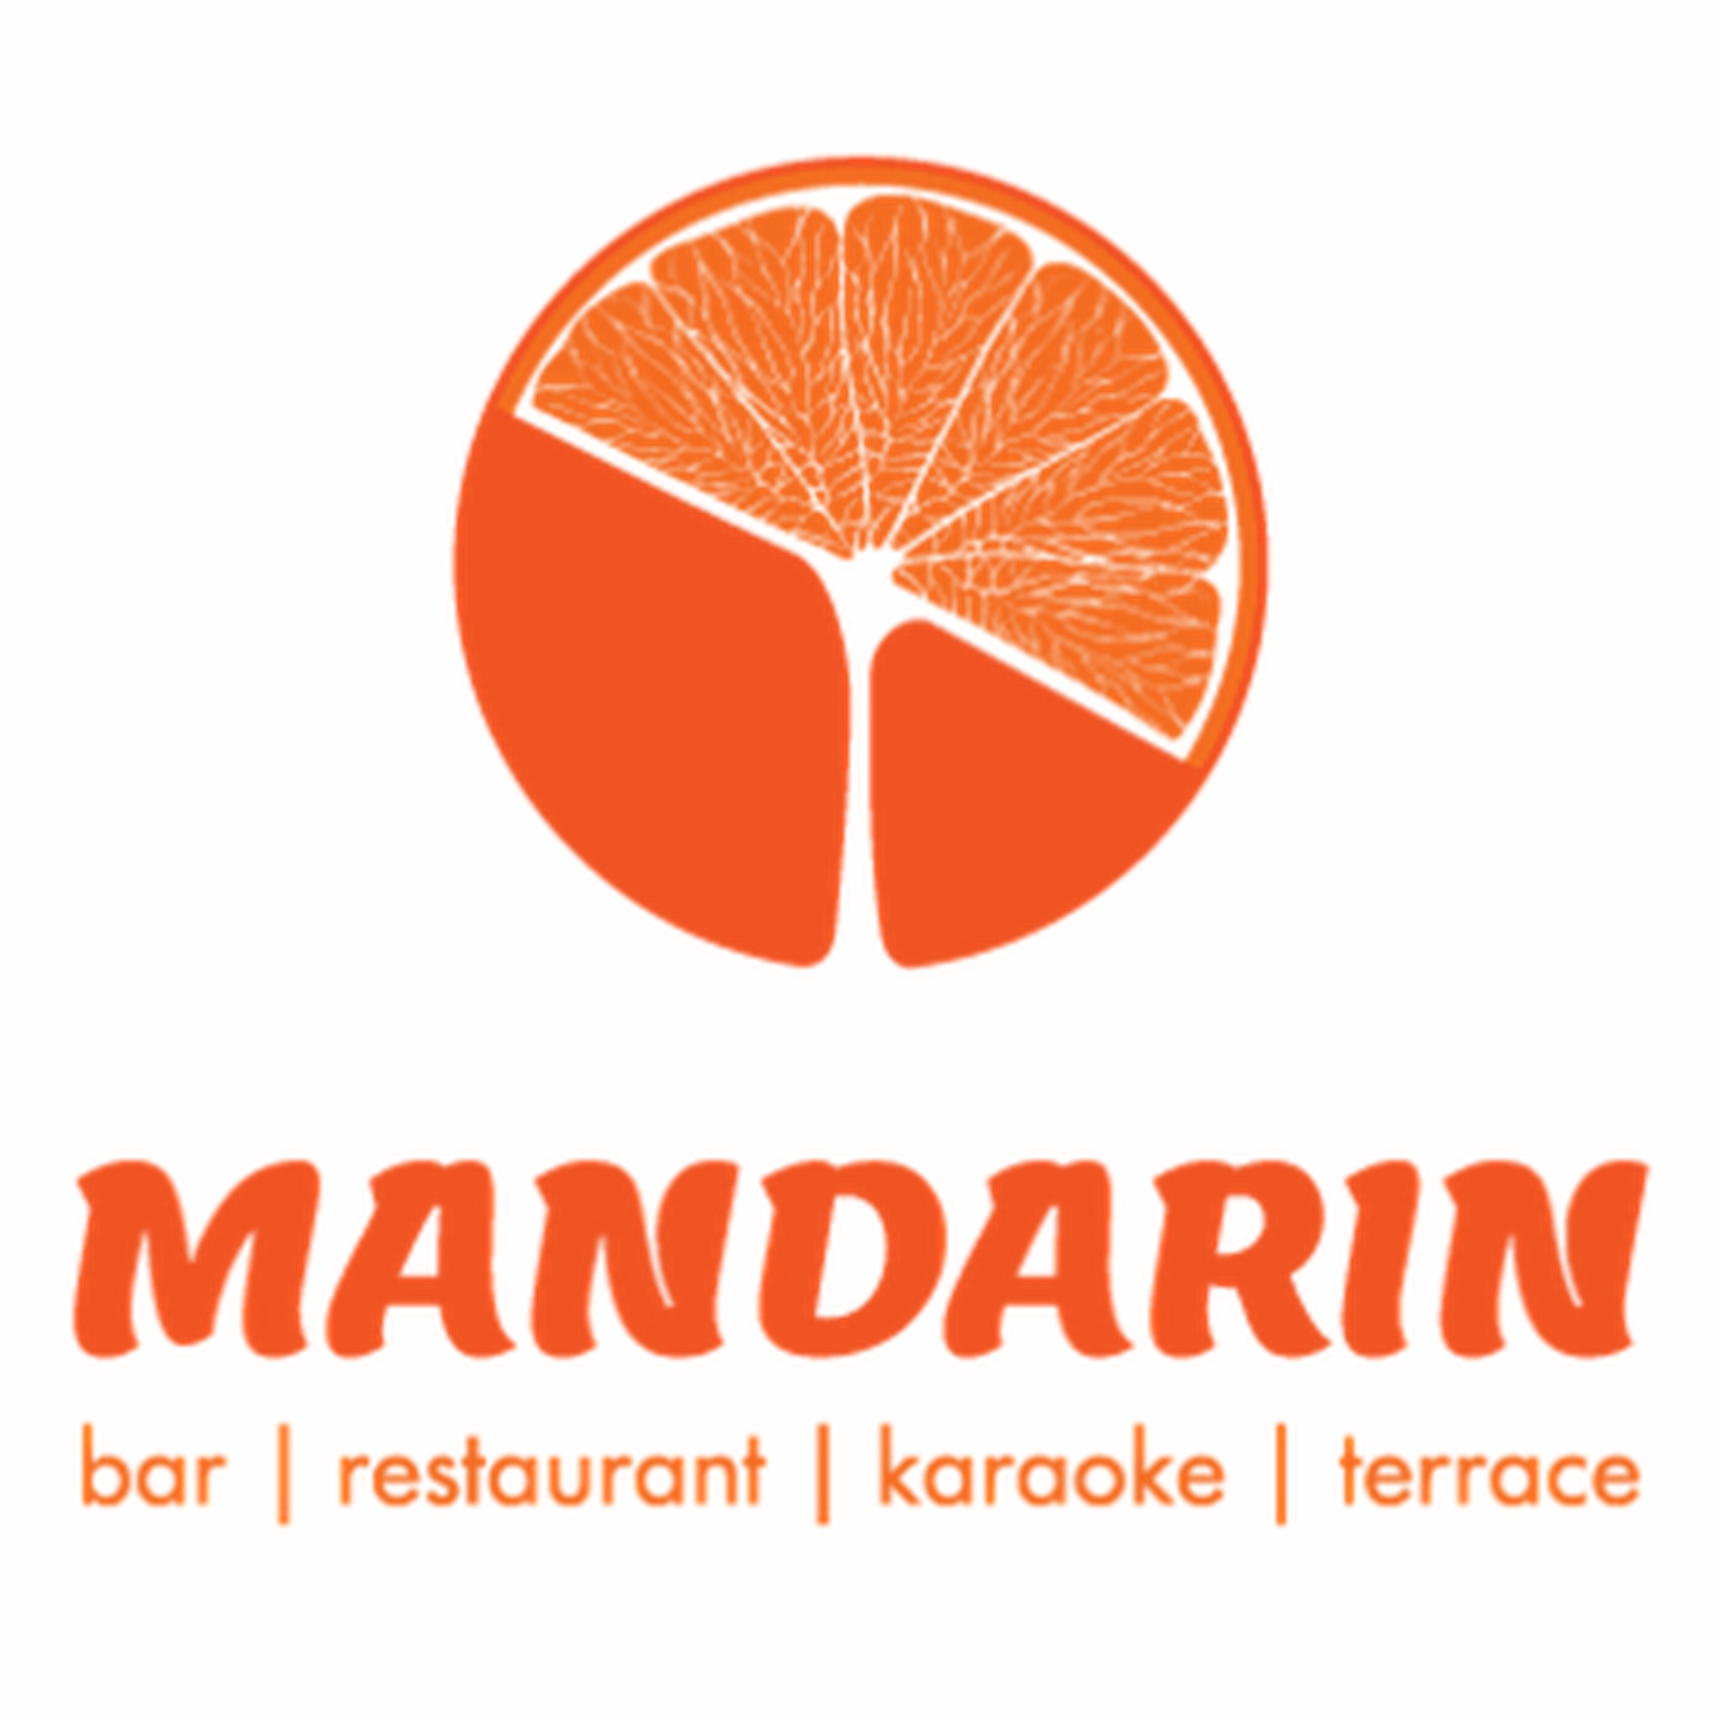 Мандарин банк. Мандарин. Мандарин логотип. Мандарин ресторан логотип. ТРЦ мандарин в Сочи логотип.